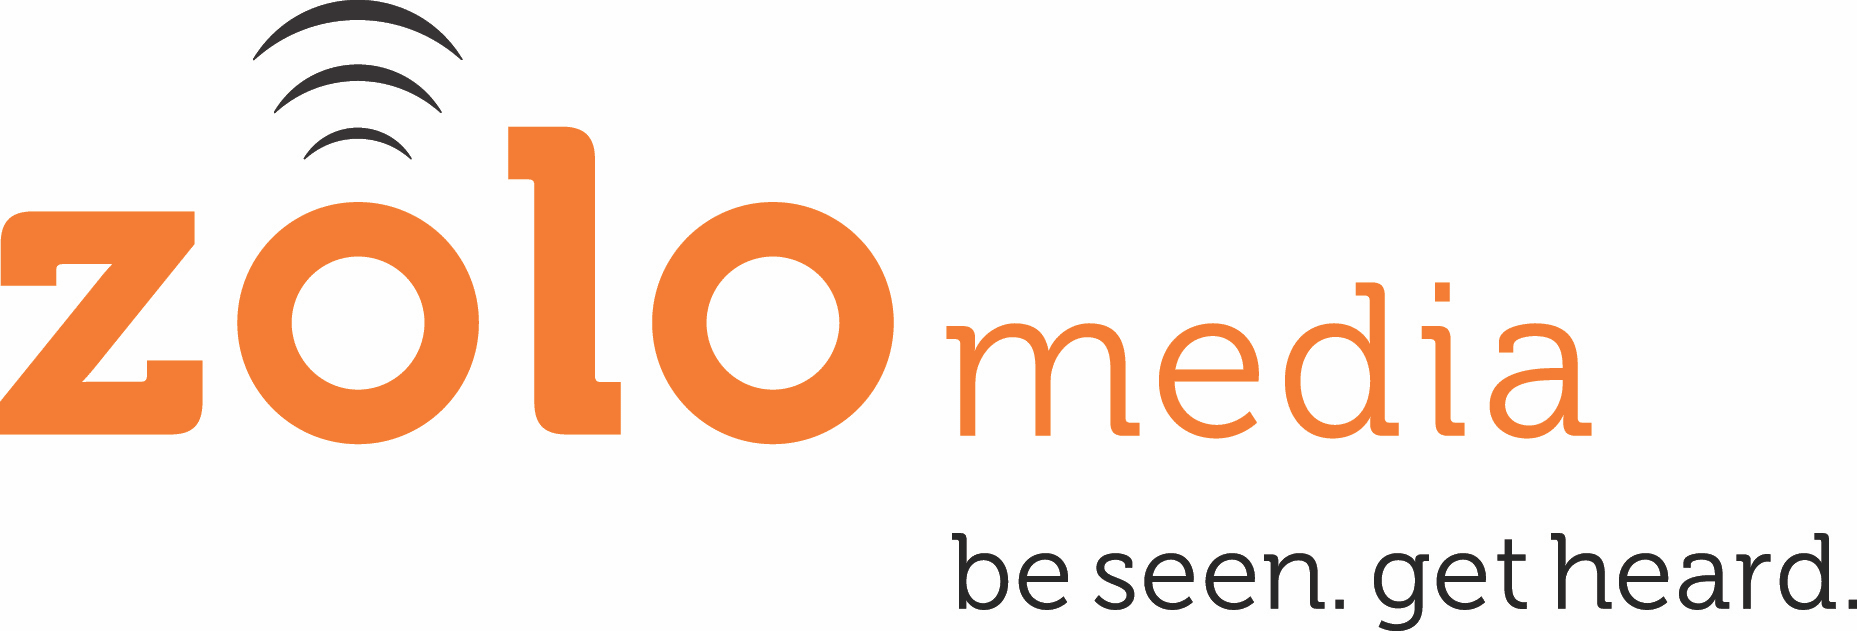 zolo-media-logo.png